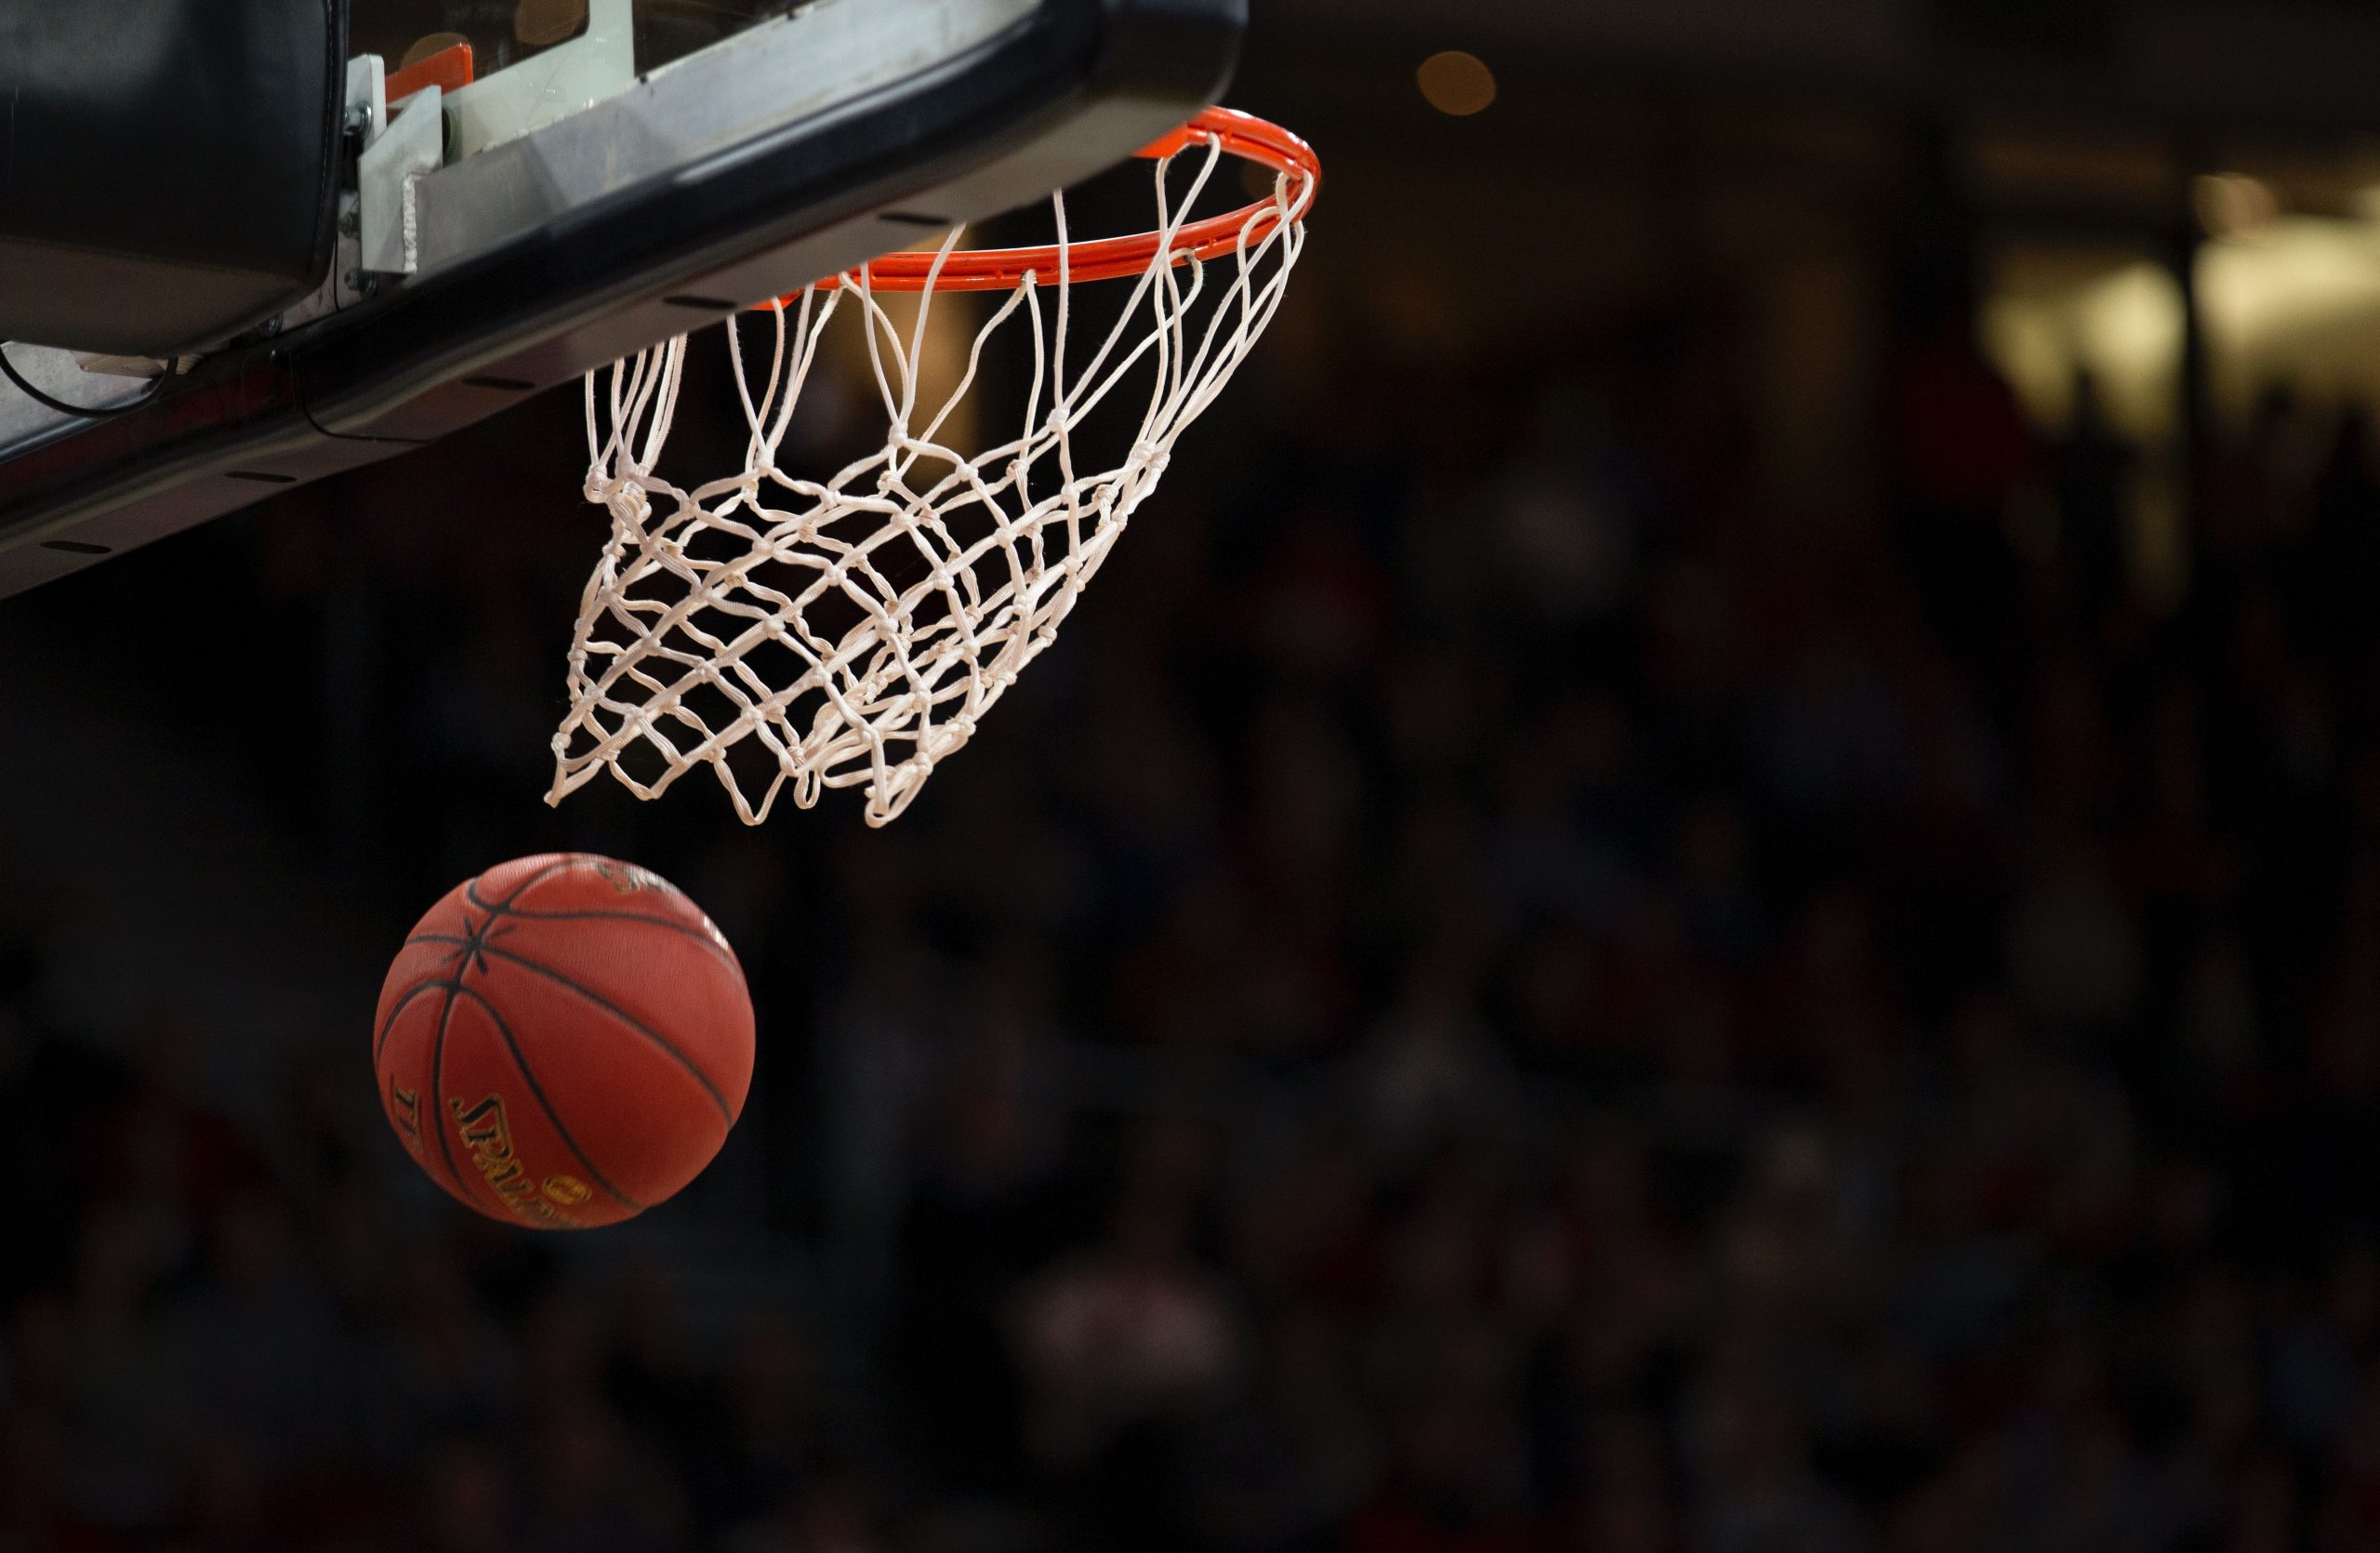 NBA: San Antonio Spurs vs Detroit Pistons game postponed due to COVID-19 protocol